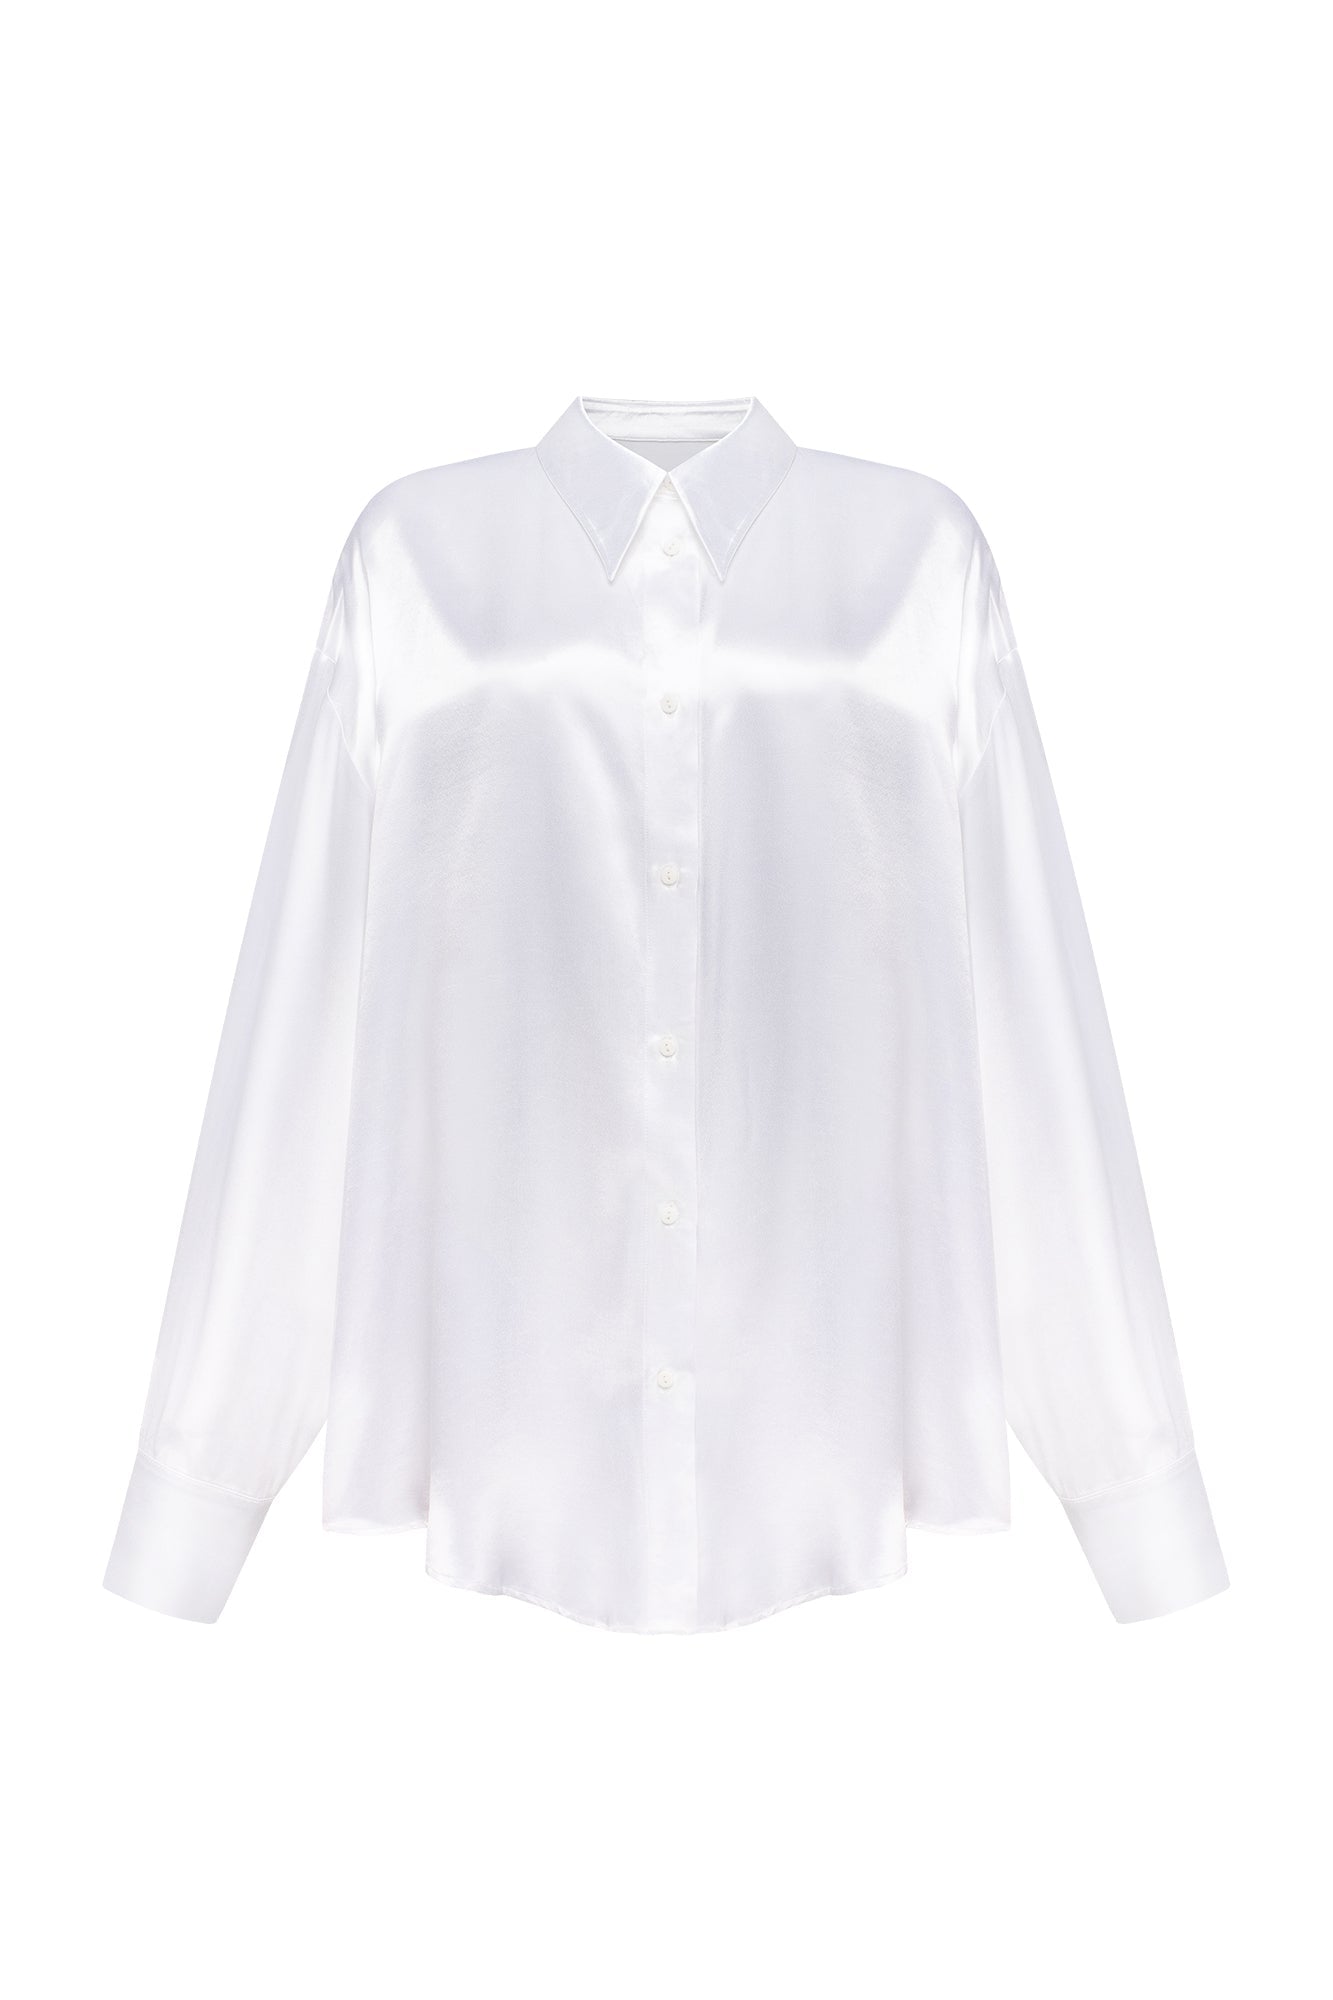 Lupe Shirt White